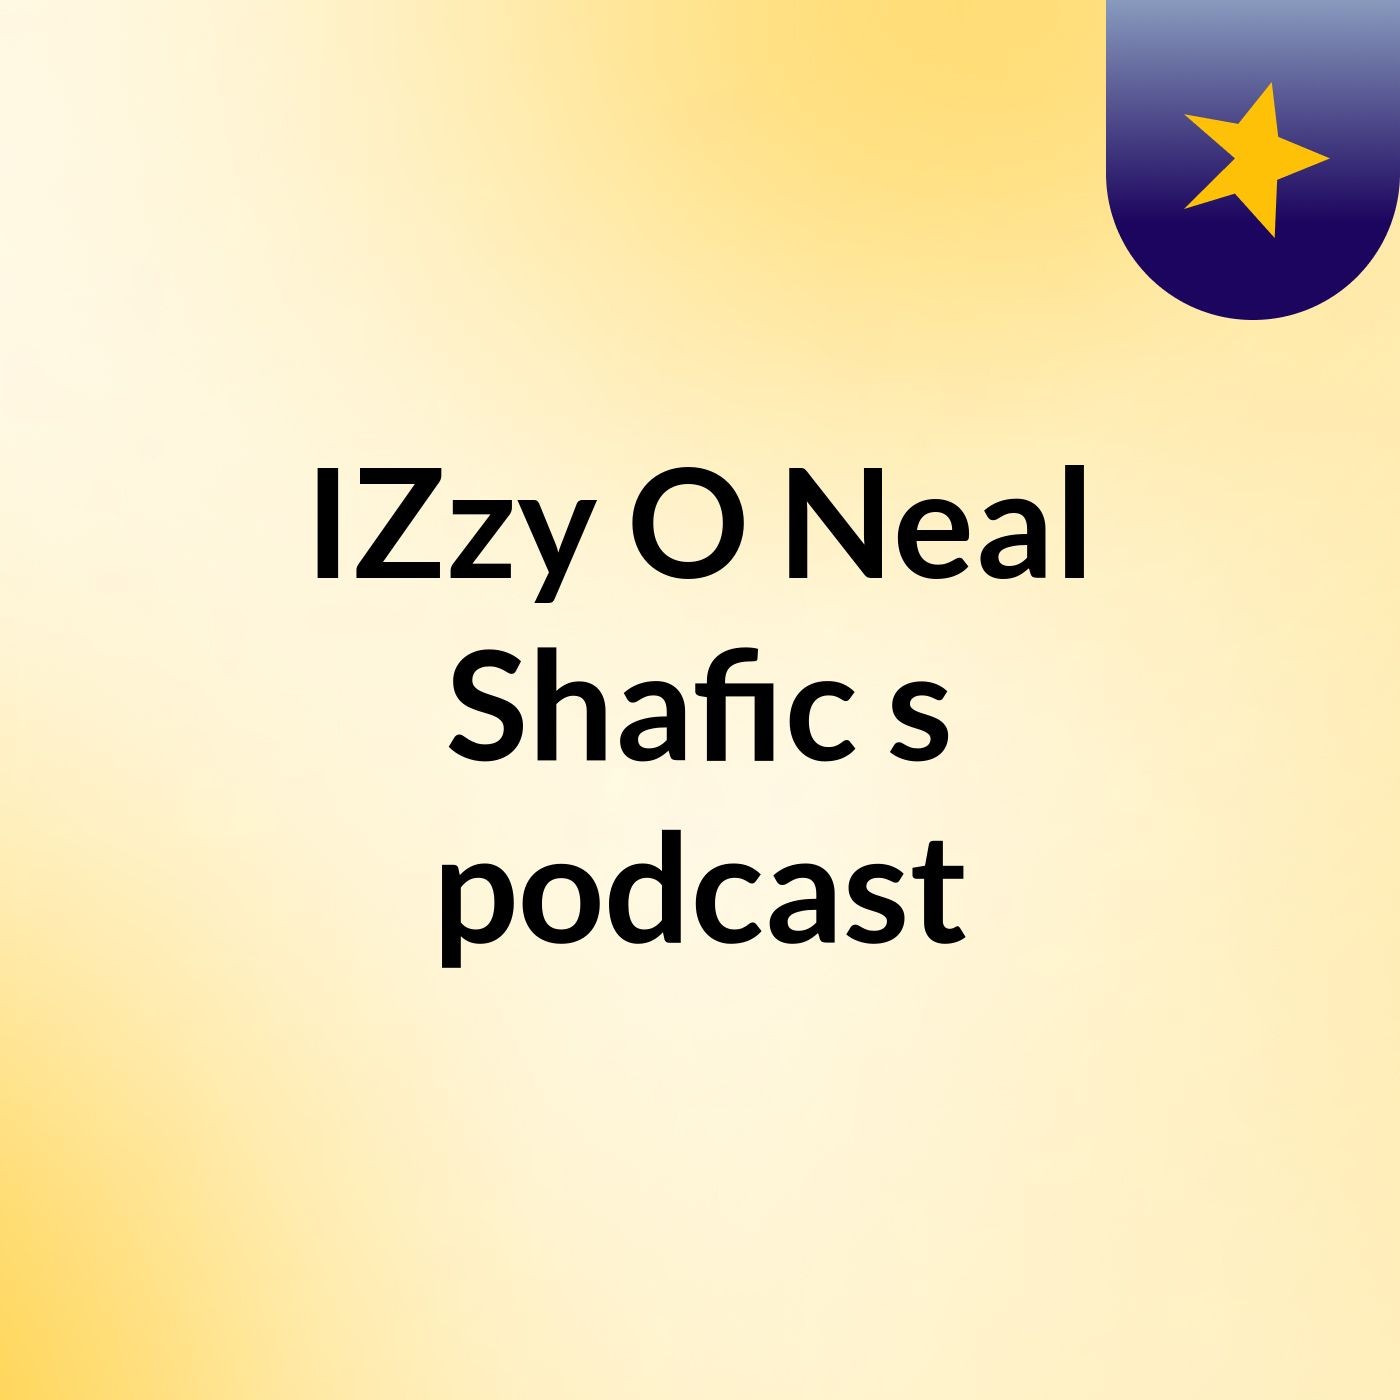 IZzy O'Neal Shafic's podcast